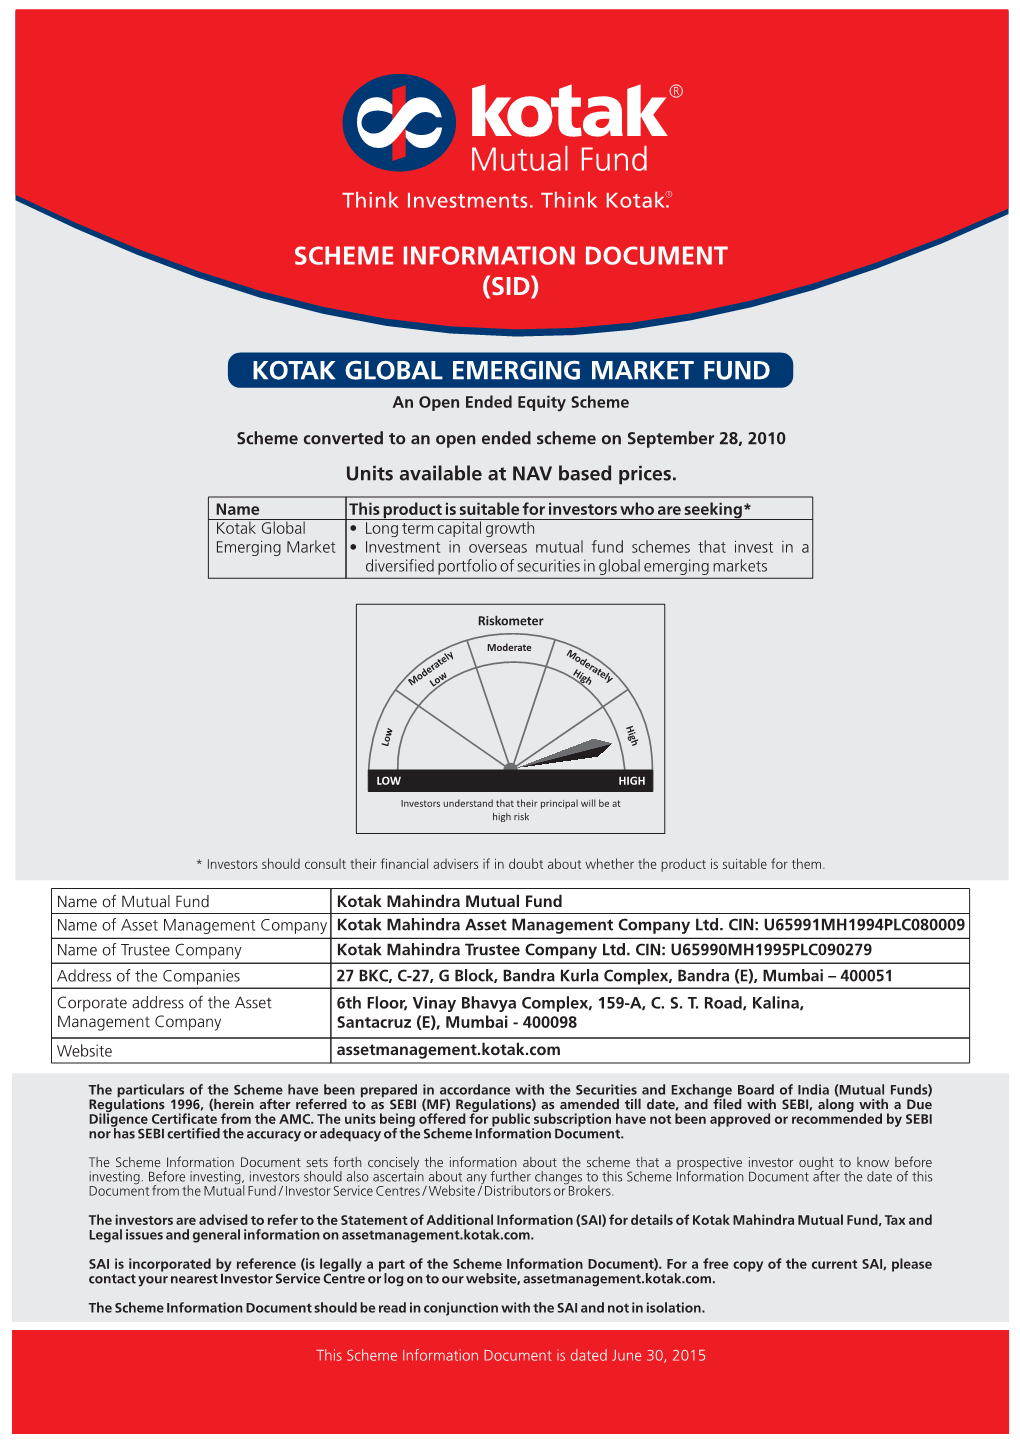 Kotak Global Emerging Market Fund Scheme Information Document